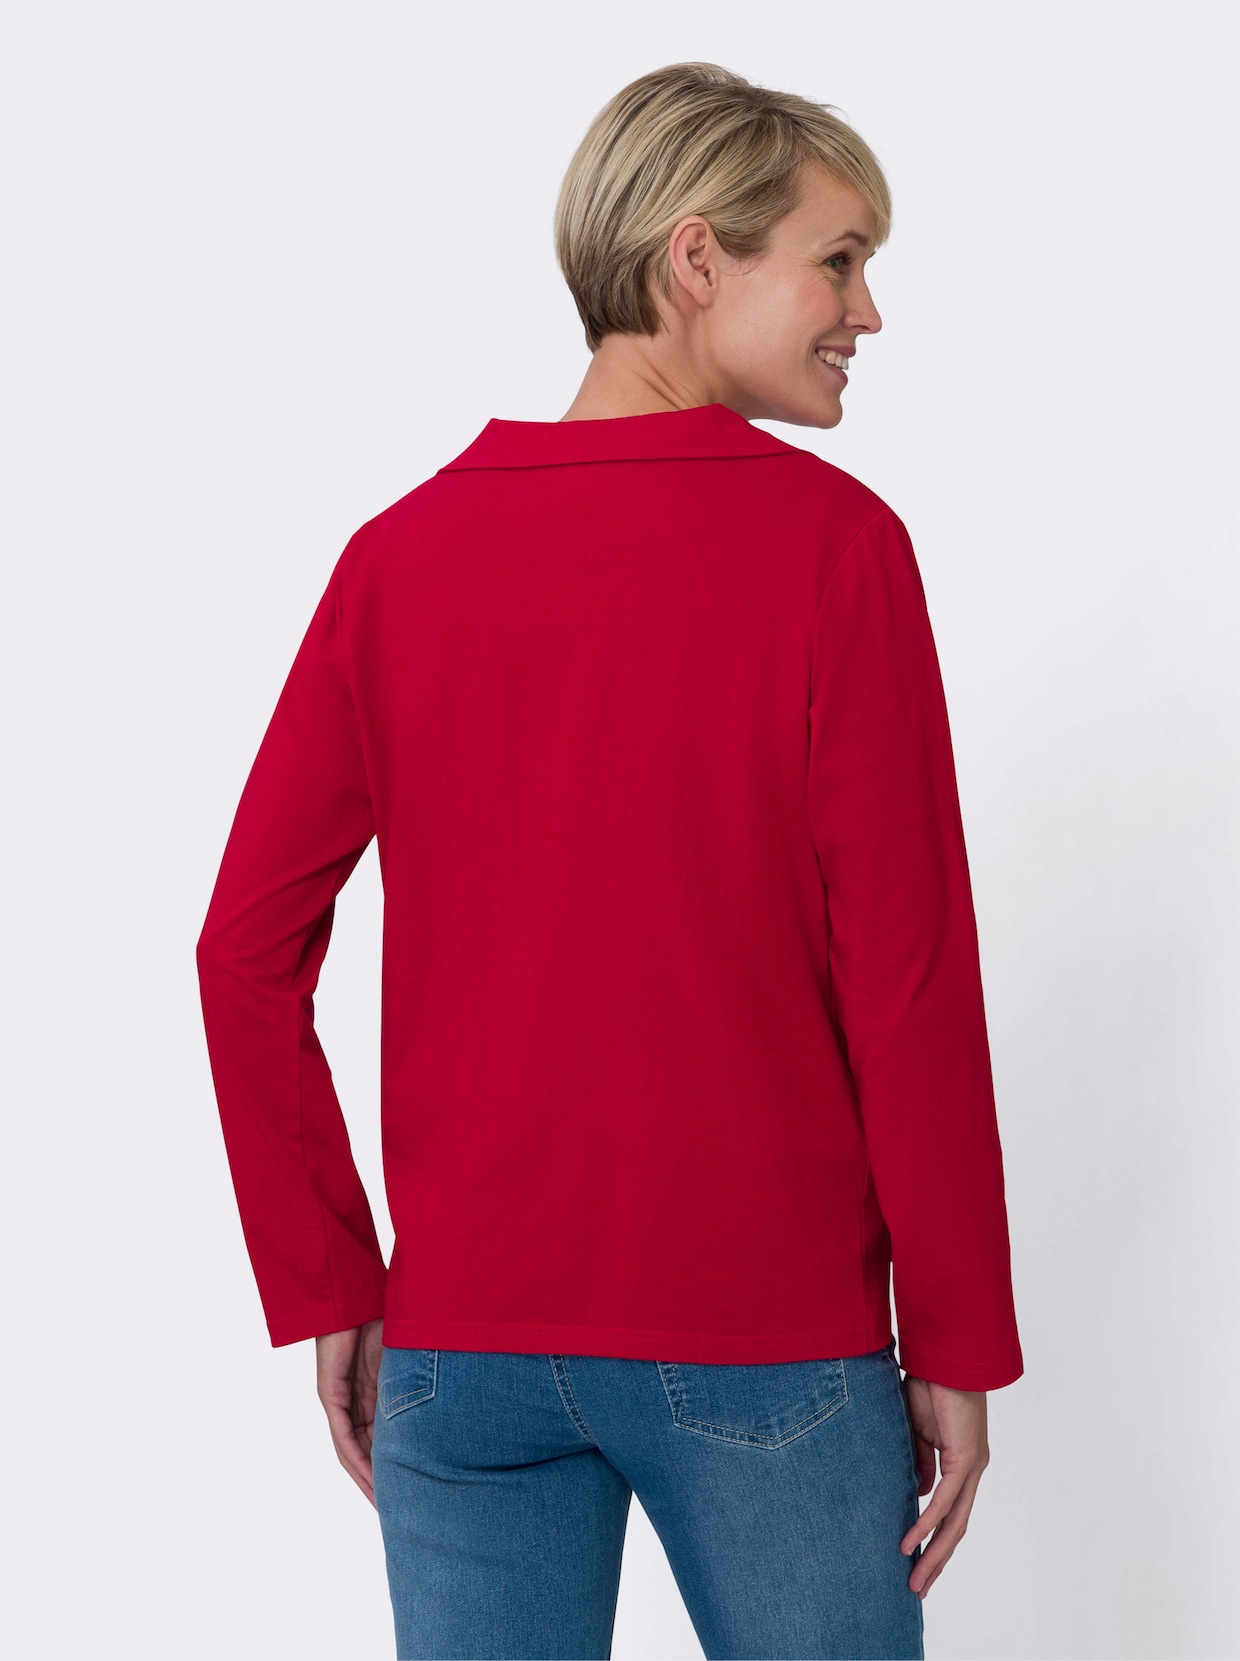 Shirt-twinset - rood + wit/rood bedrukt